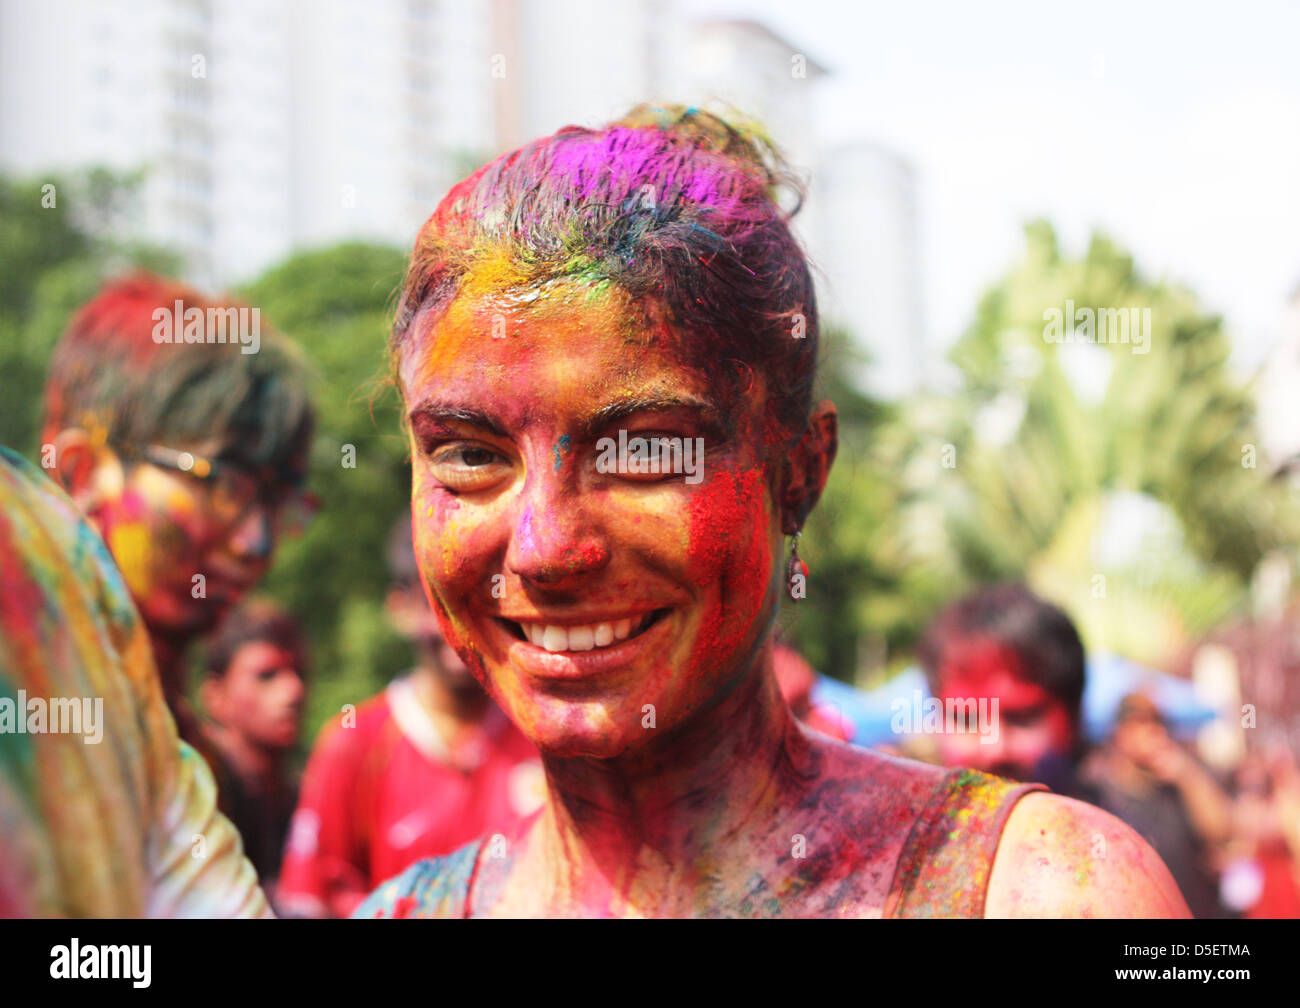 A tourist face smeared with colored powder, celebrates Holi festival at Shree Lakshmi Narayan Temple in Kuala Lumpur, Sunday, March. 31, 2013. - kuala-lumpur-malaysia-31st-march-2013-a-tourist-face-smeared-with-D5ETMA